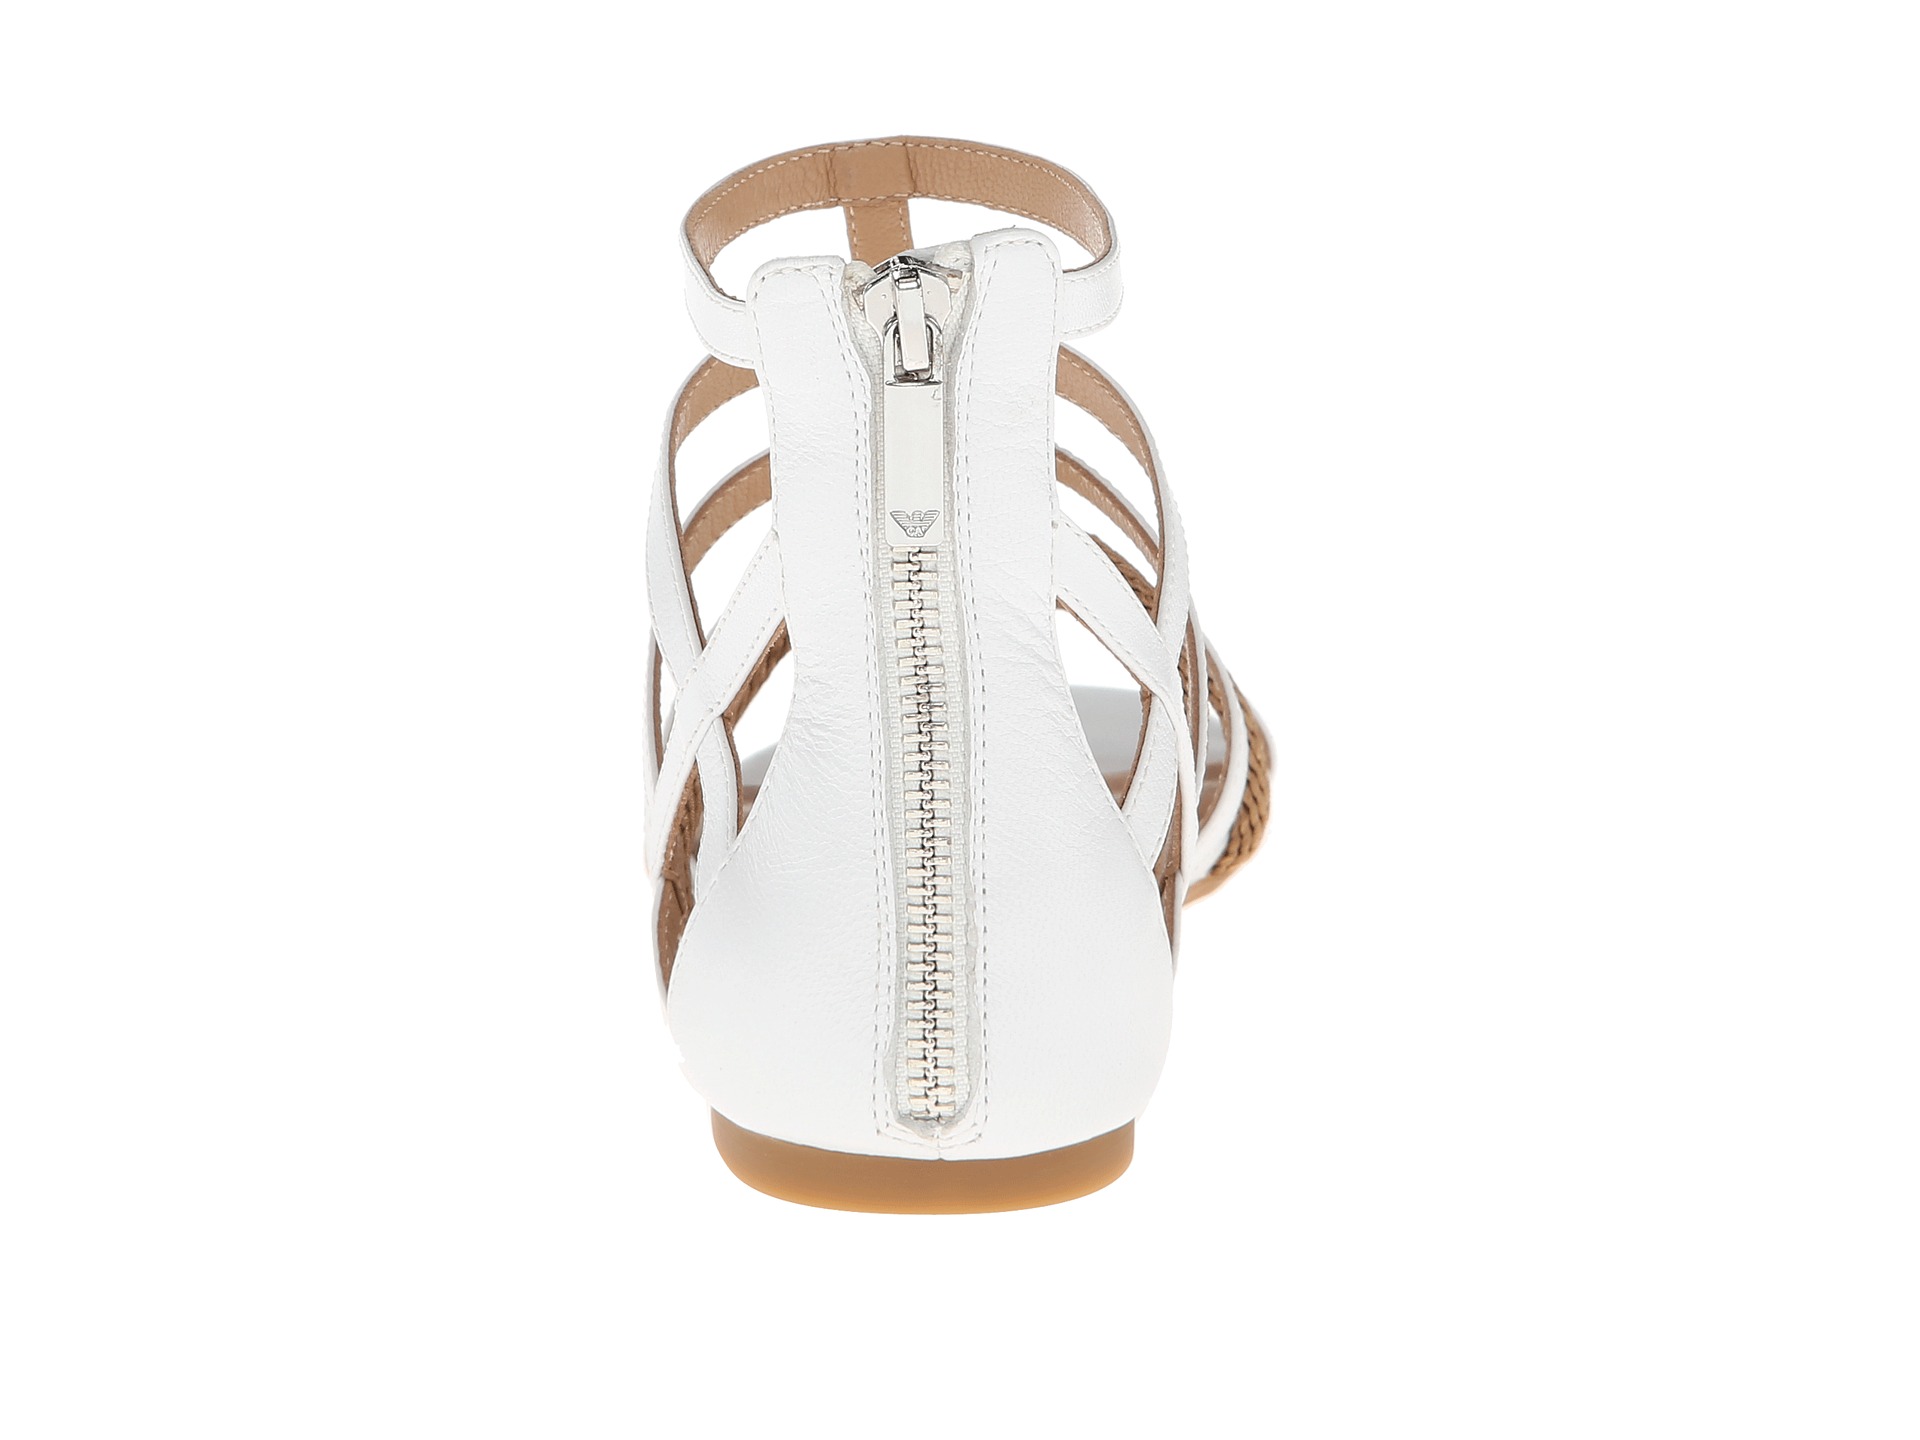 Armani Jeans Gladiator Sandal White | Shipped Free at Zappos